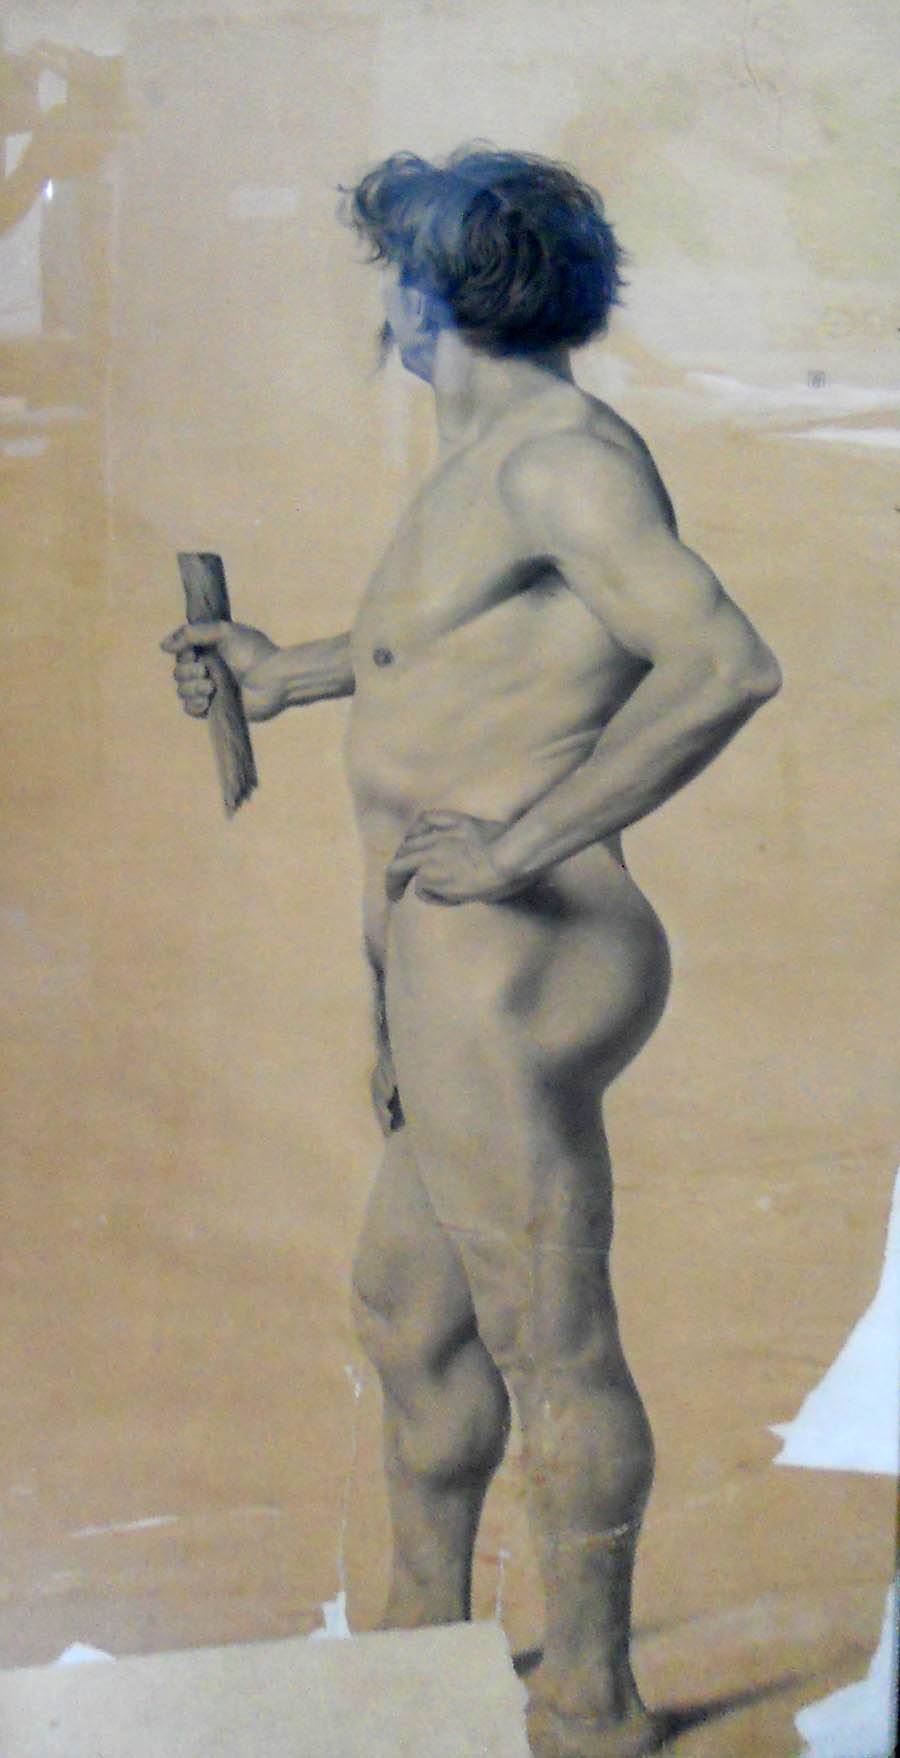 Academia desnudo, 1880